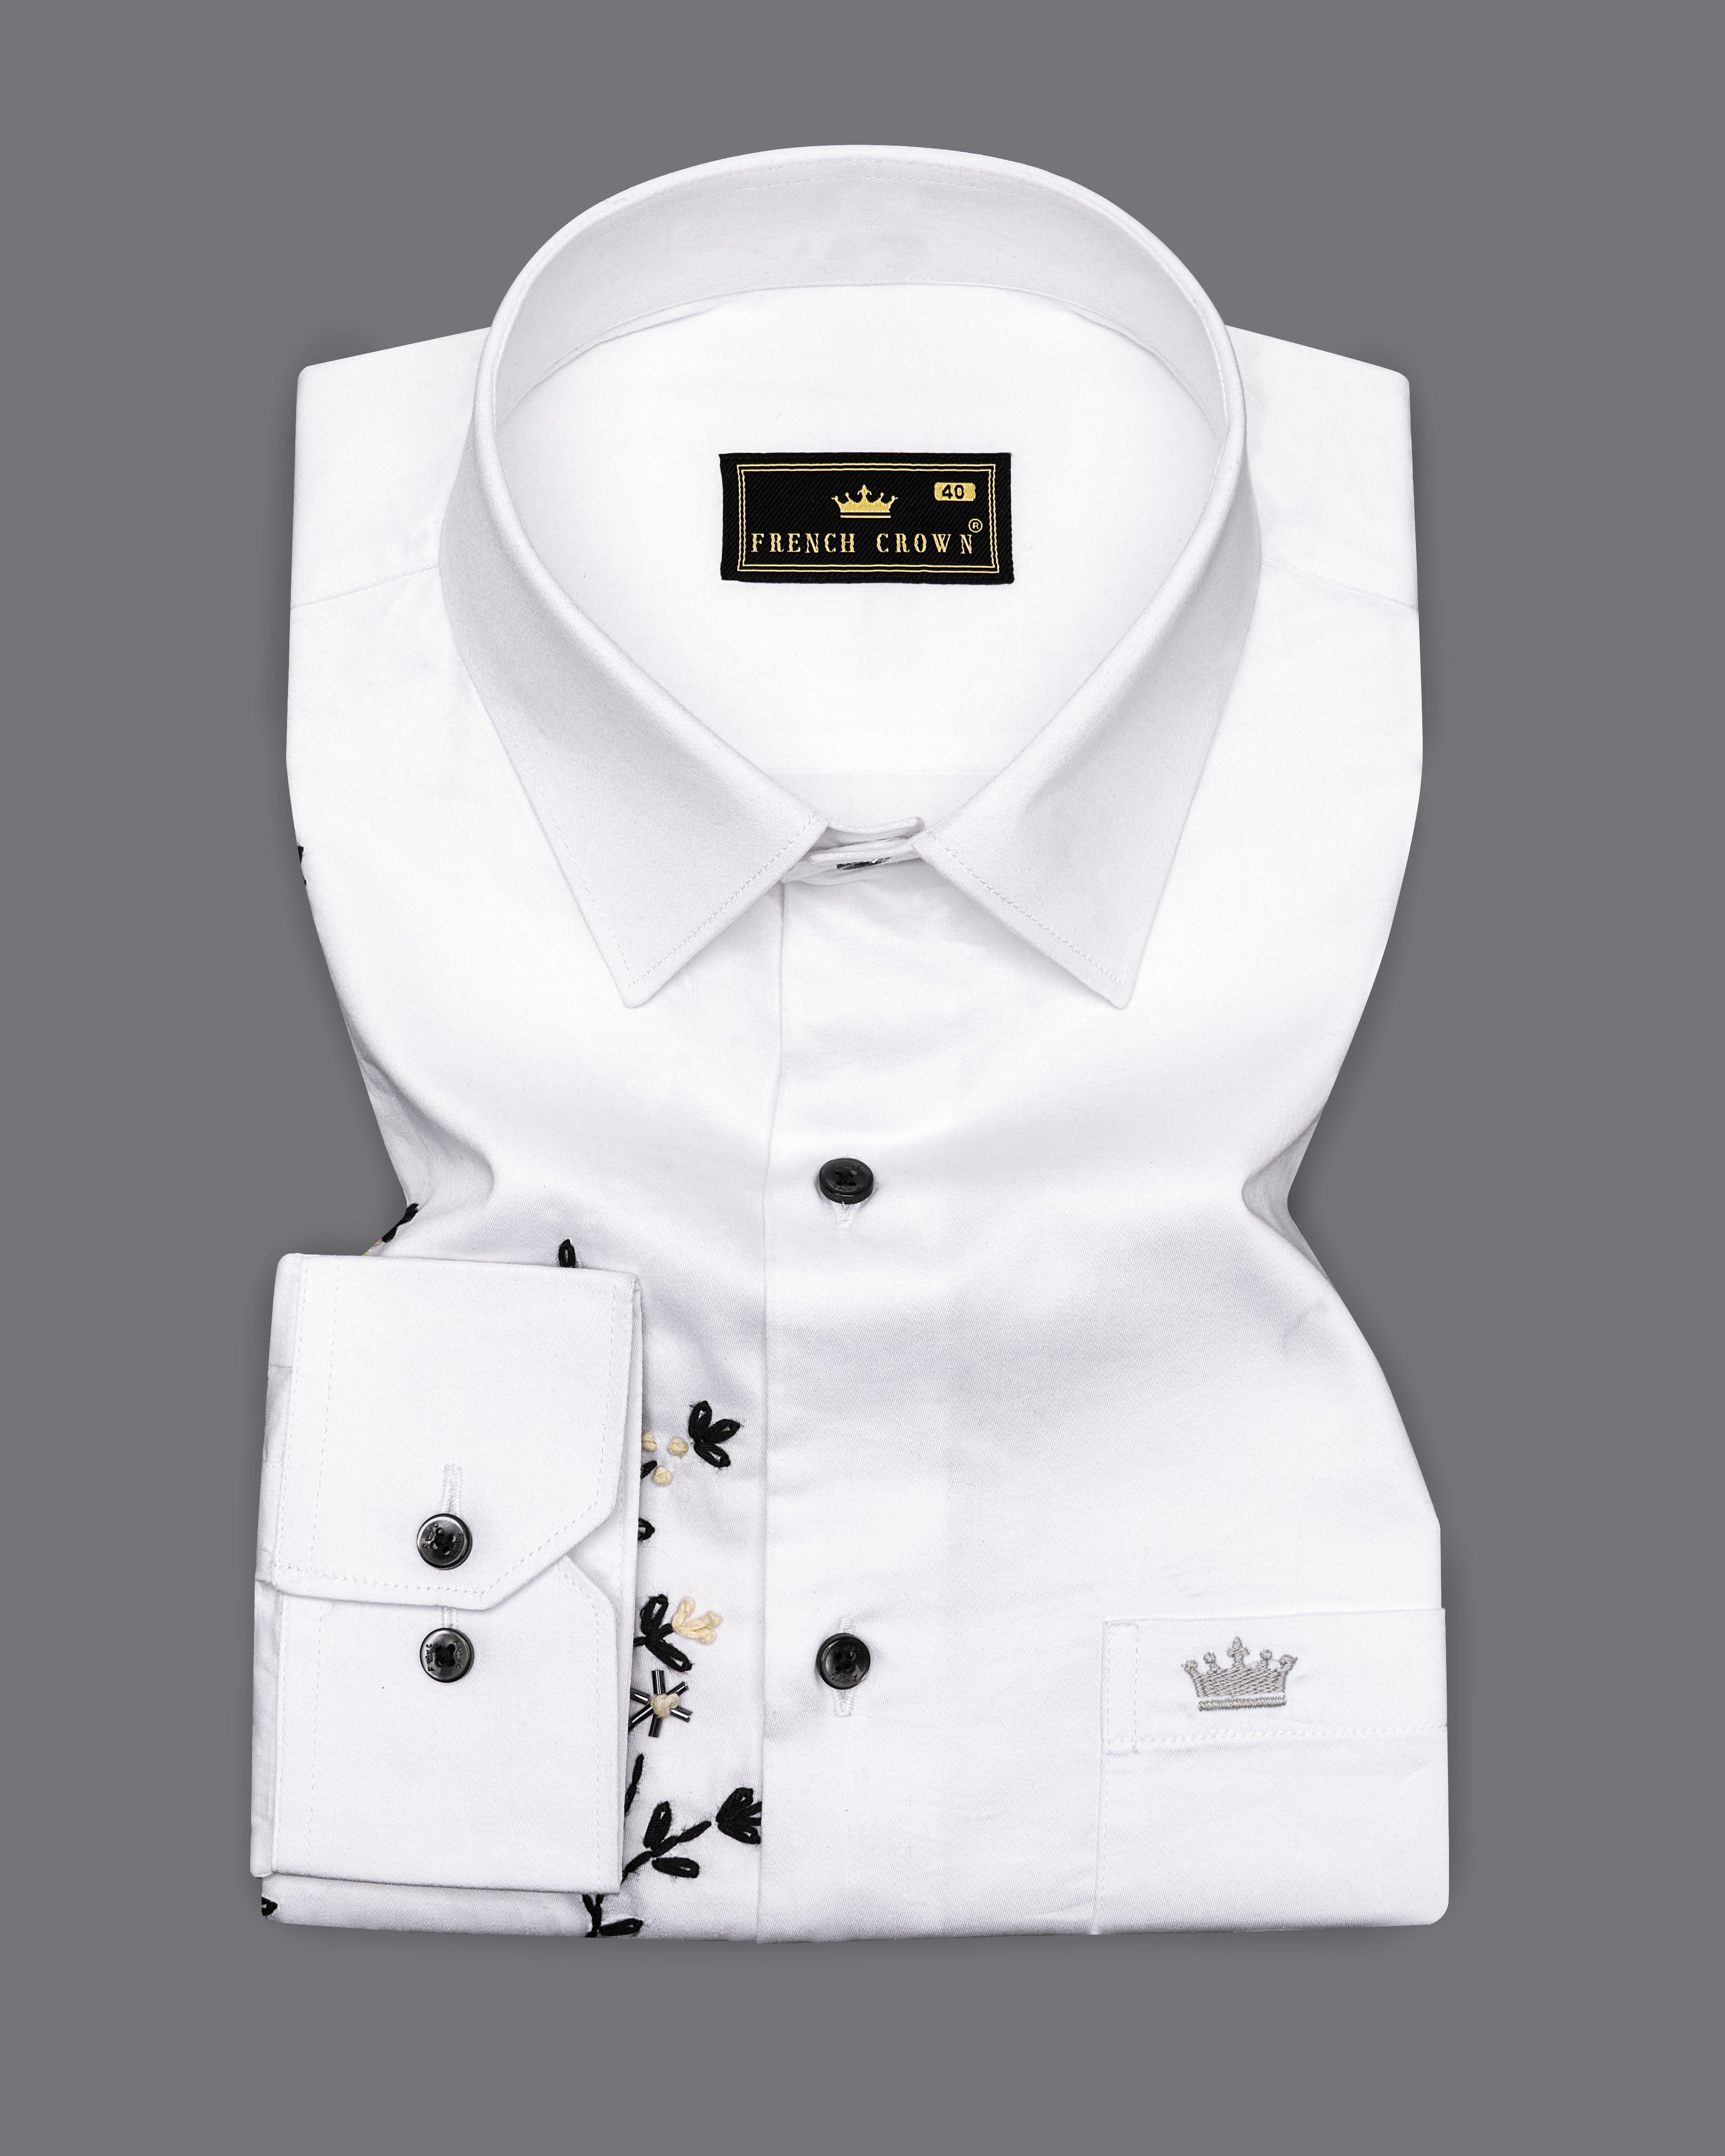 Bright White Subtle Sheen Leaves Hand Embroidered Super Soft Premium Cotton Designer Shirt 1062-BLK-E053-38,1062-BLK-E053-H-38,1062-BLK-E053-39,1062-BLK-E053-H-39,1062-BLK-E053-40,1062-BLK-E053-H-40,1062-BLK-E053-42,1062-BLK-E053-H-42,1062-BLK-E053-44,1062-BLK-E053-H-44,1062-BLK-E053-46,1062-BLK-E053-H-46,1062-BLK-E053-48,1062-BLK-E053-H-48,1062-BLK-E053-50,1062-BLK-E053-H-50,1062-BLK-E053-52,1062-BLK-E053-H-52